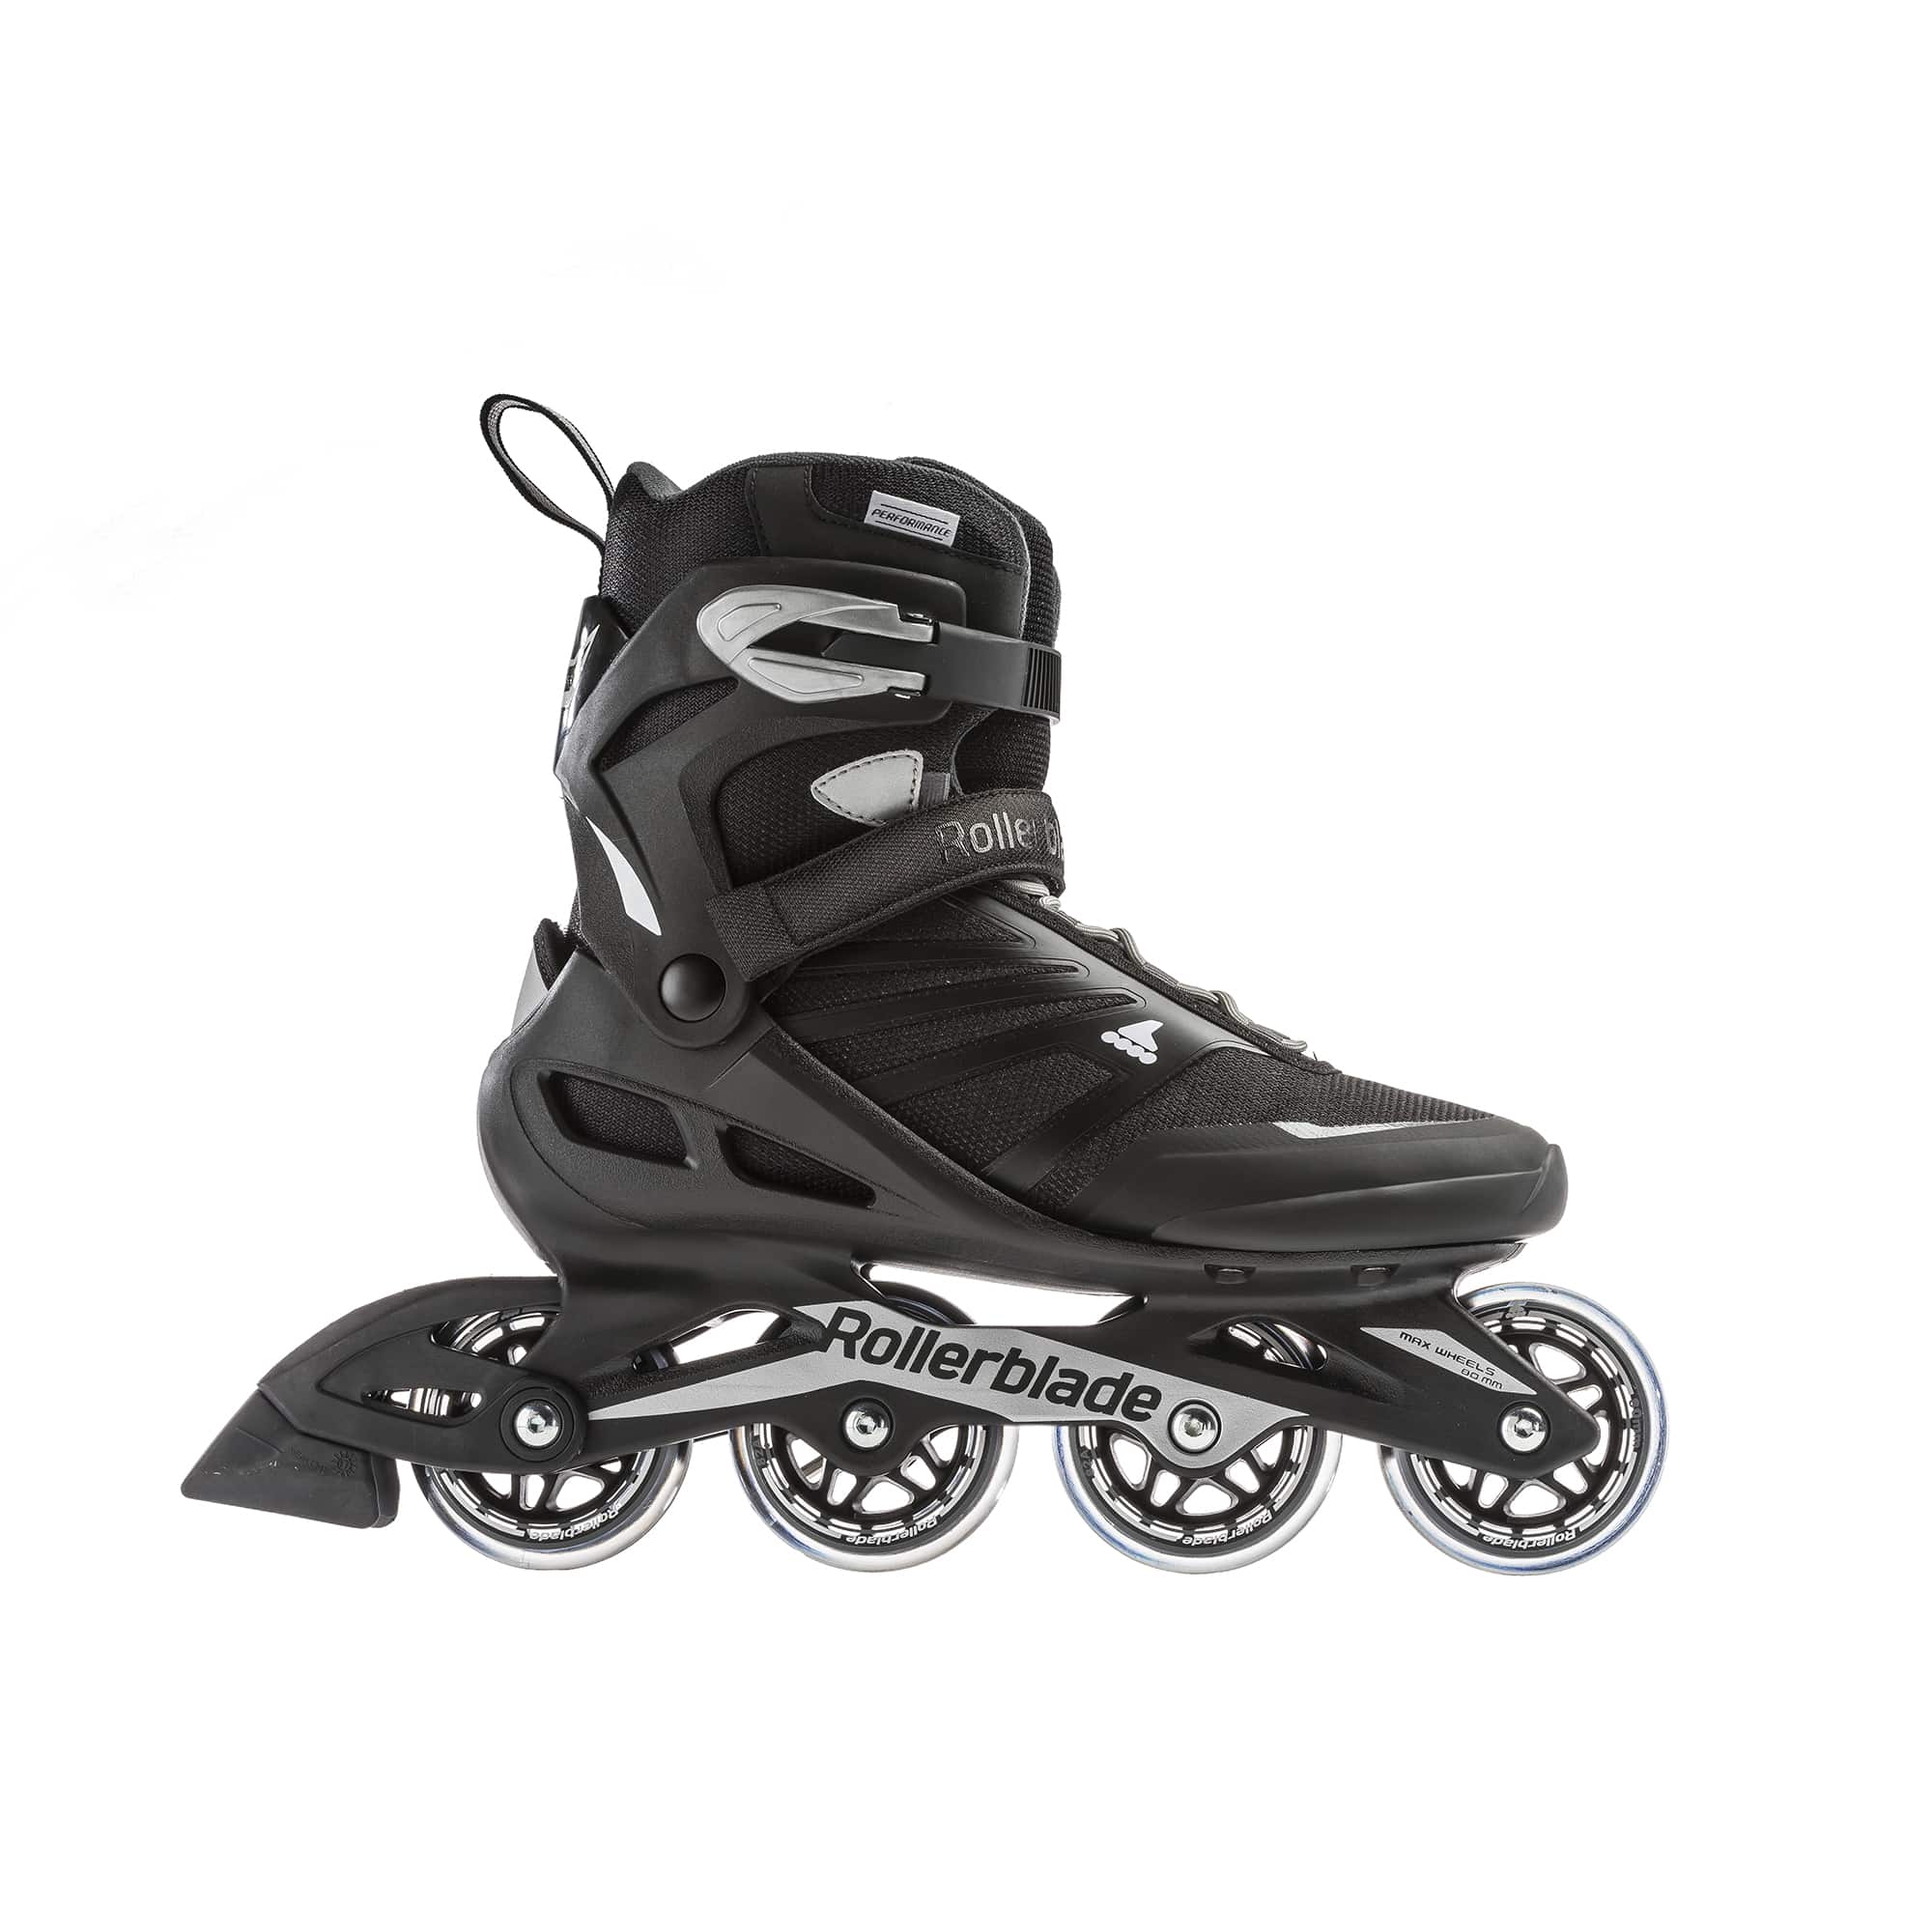 roller-blade-zetrablade-inline-roller-skates-online